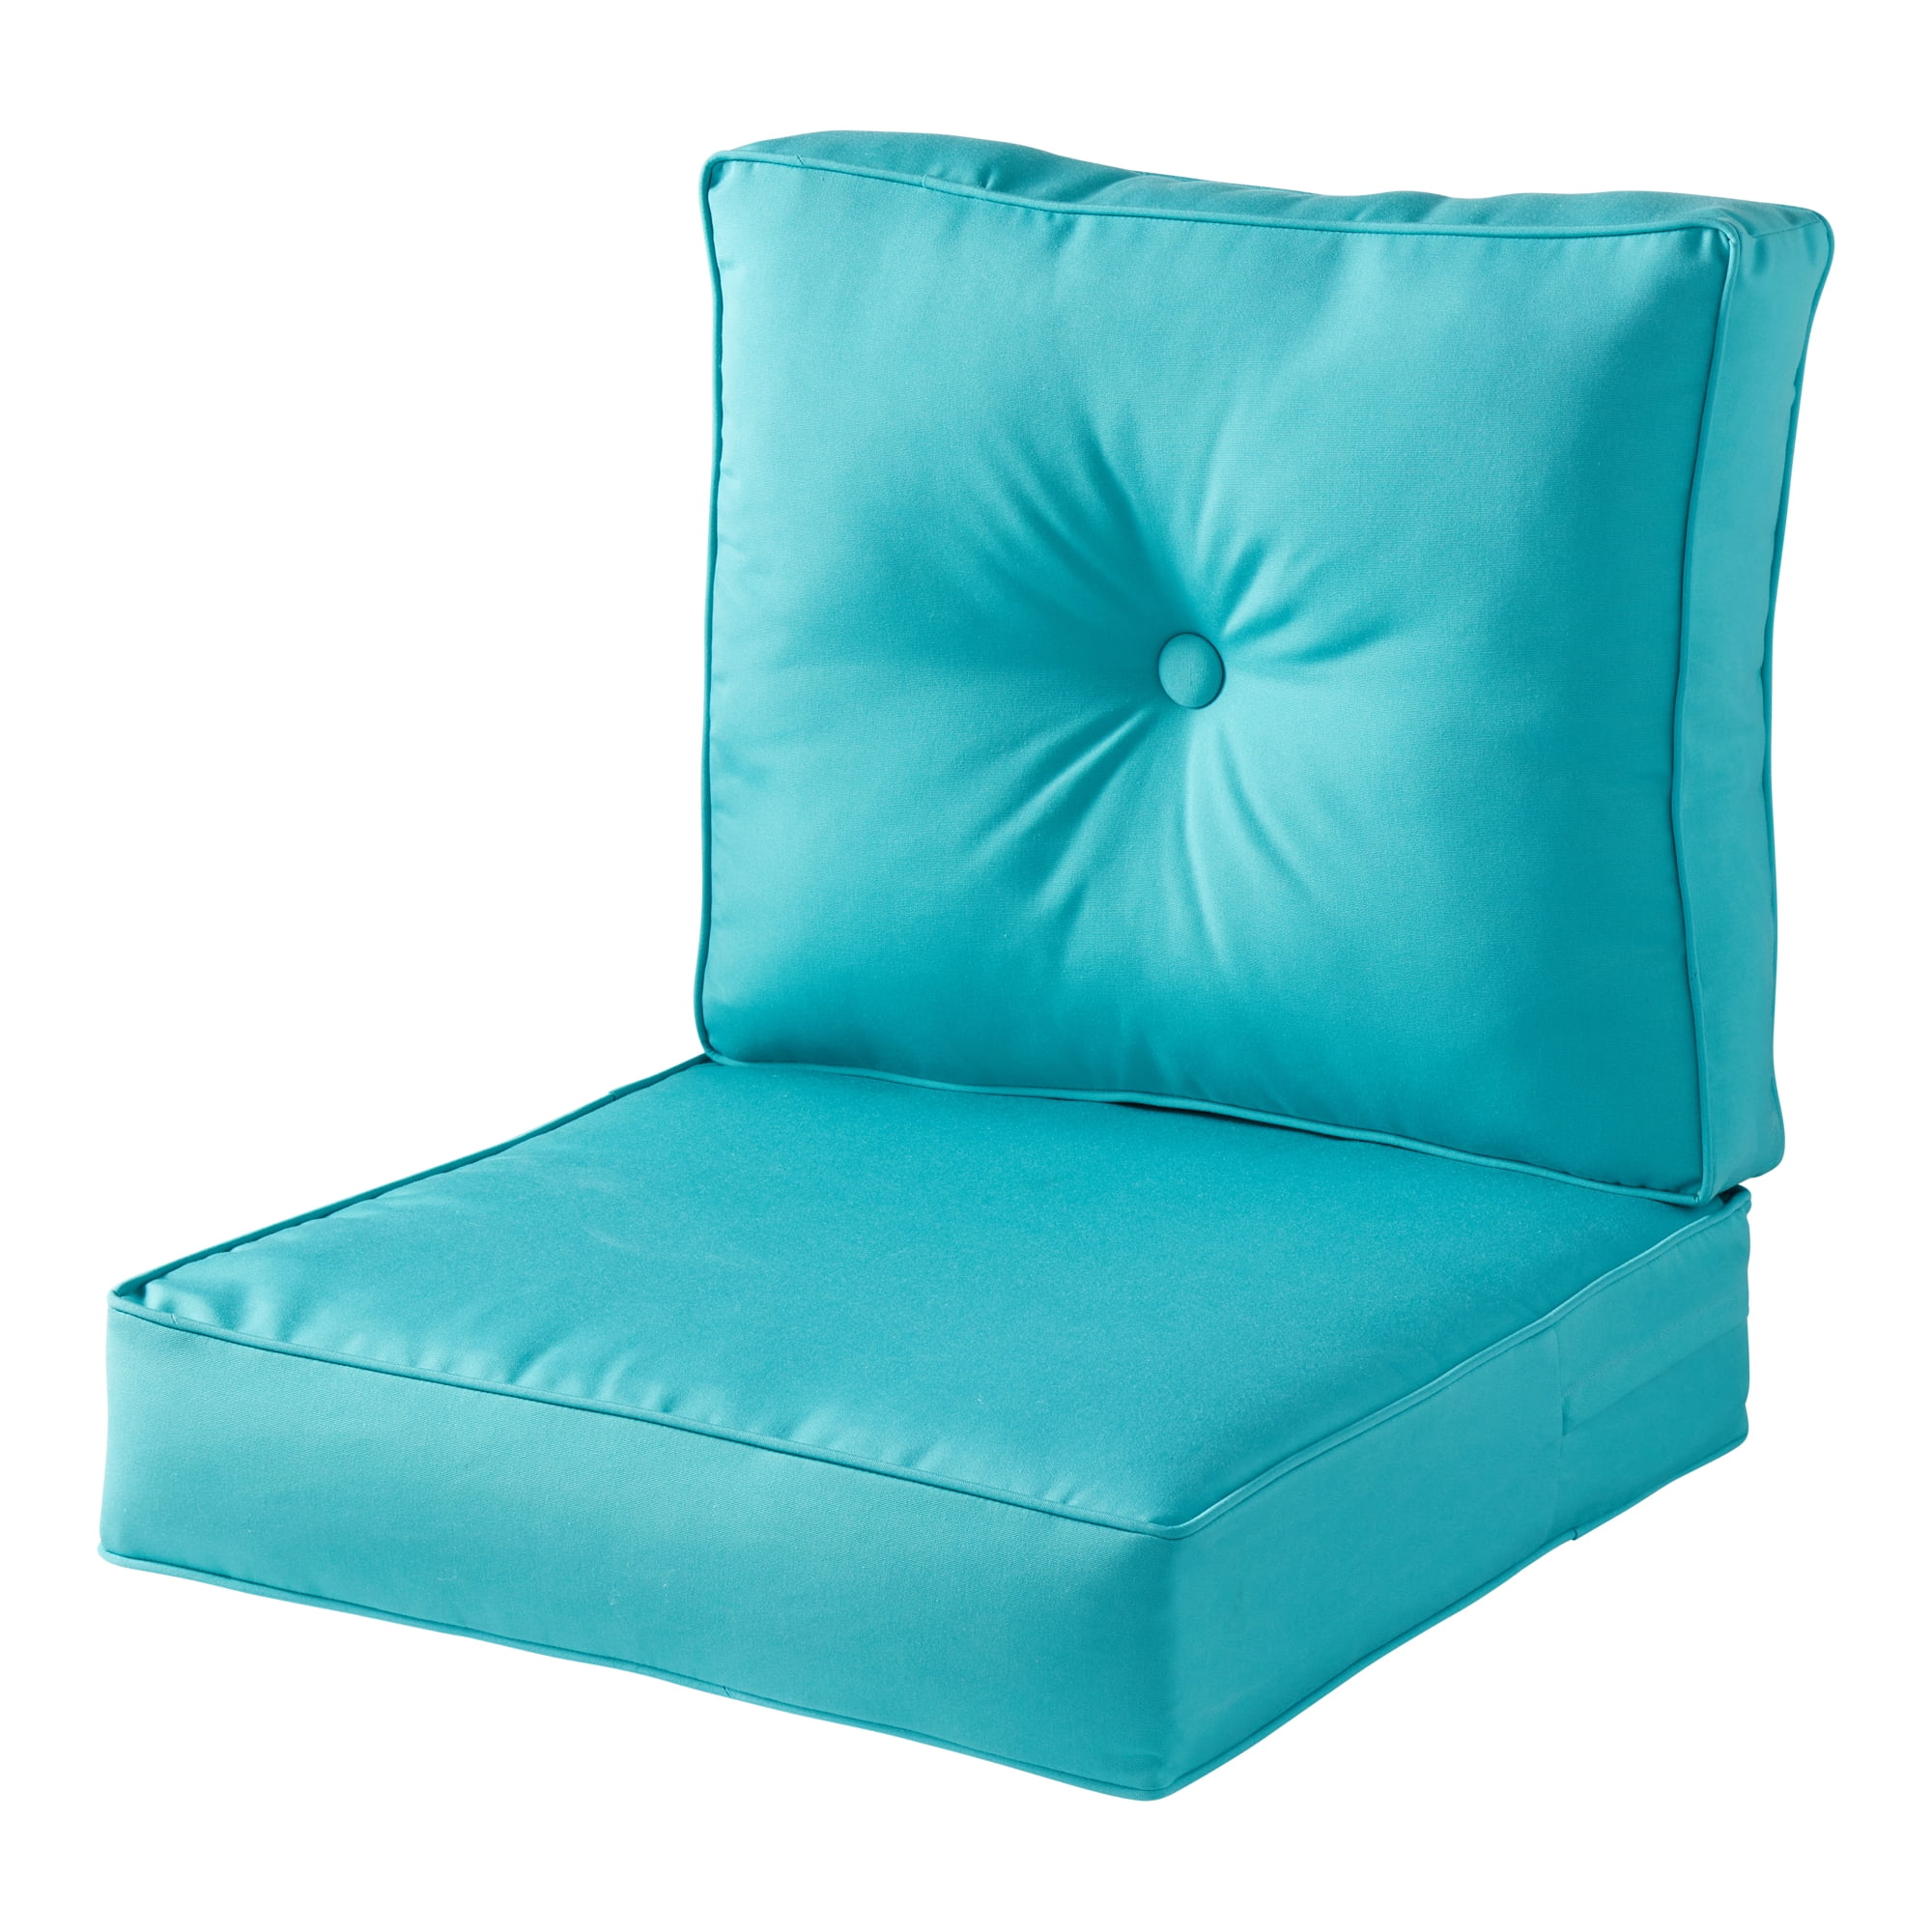 Sunbrella Canvas Aruba Blue Indoor Outdoor Deep Seat Pillow Chair Cushion Set 